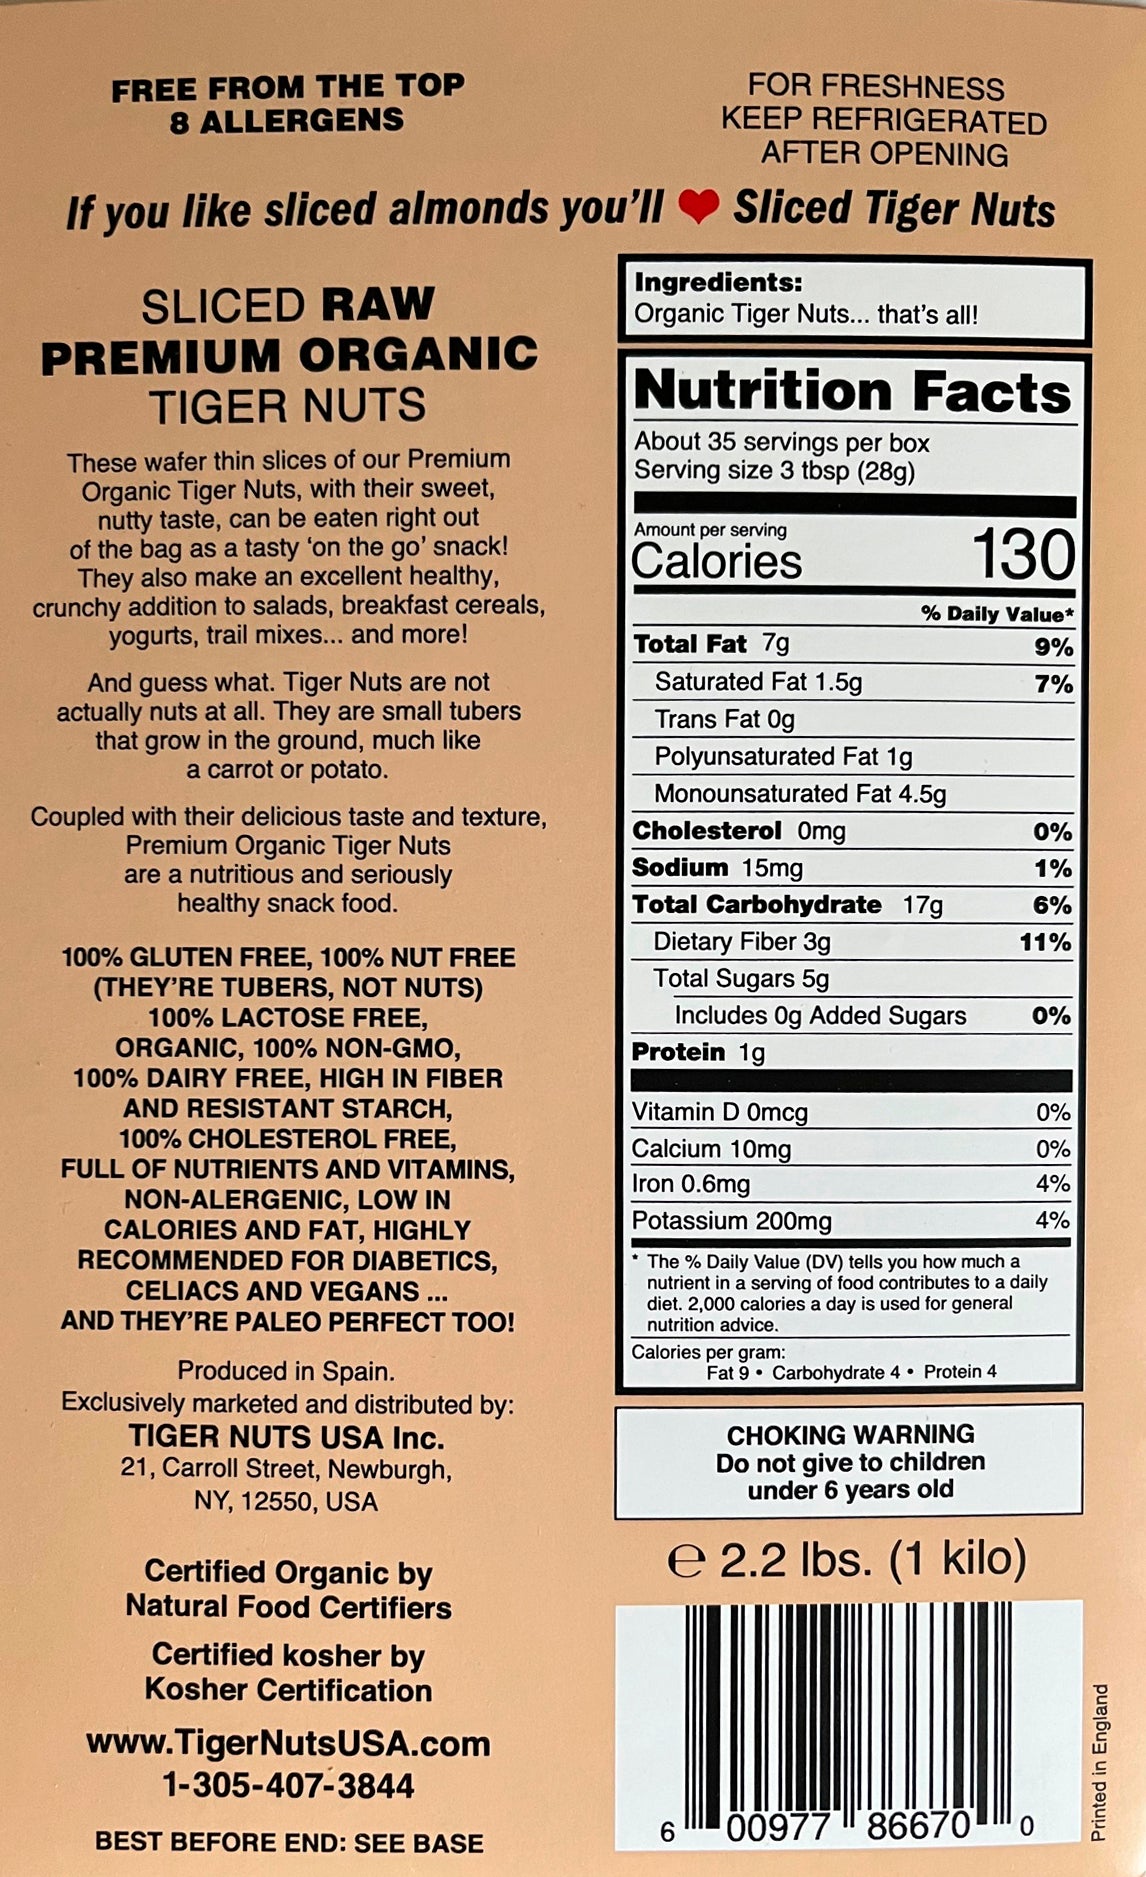 Sliced Tiger Nuts in Kilo box (2.2 lbs.)